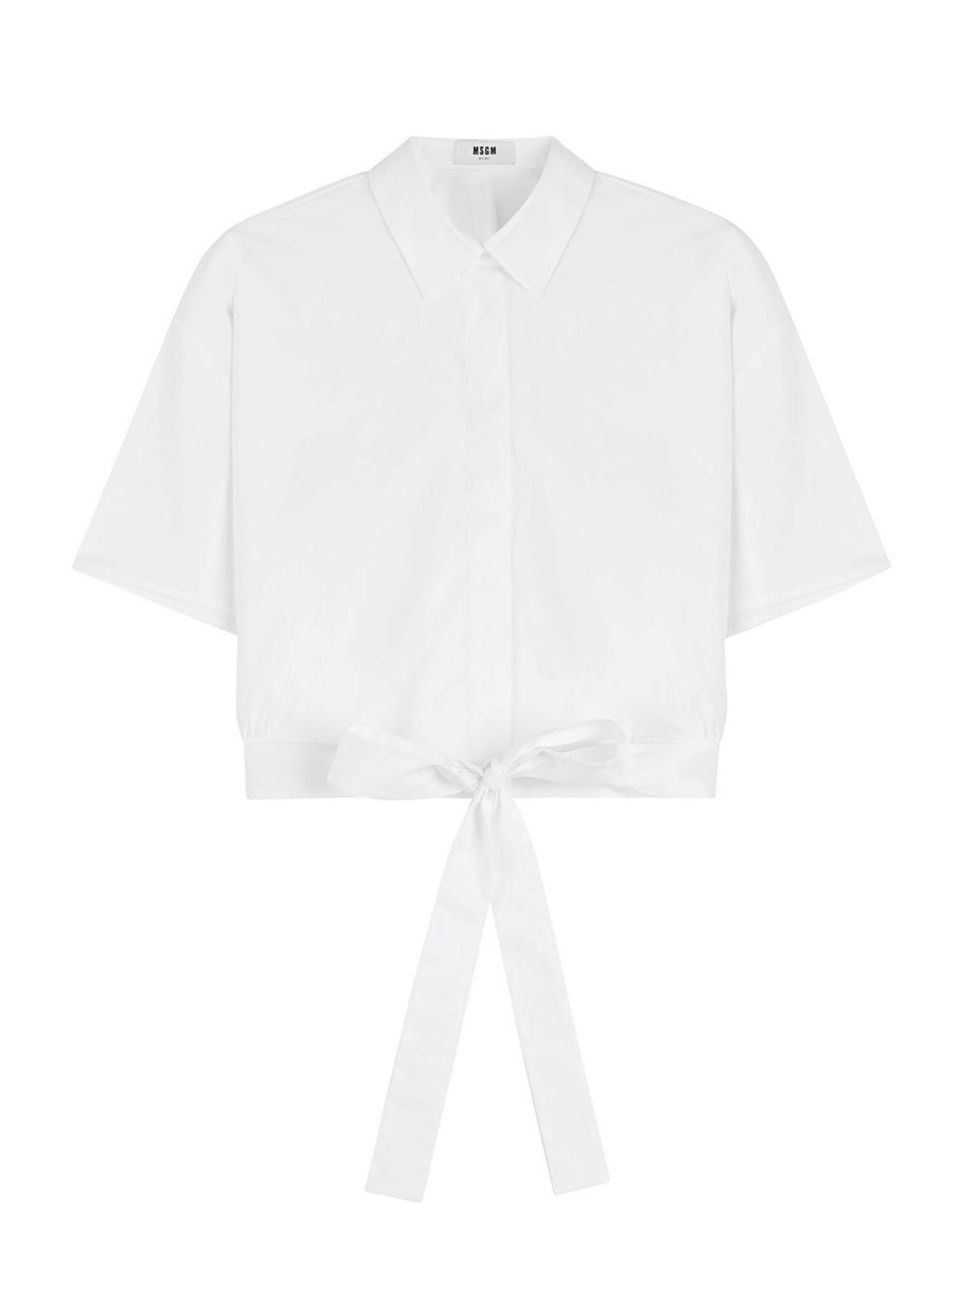 Product, Collar, Sleeve, Dress shirt, Textile, Shirt, White, Clothes hanger, Active shirt, Button, 